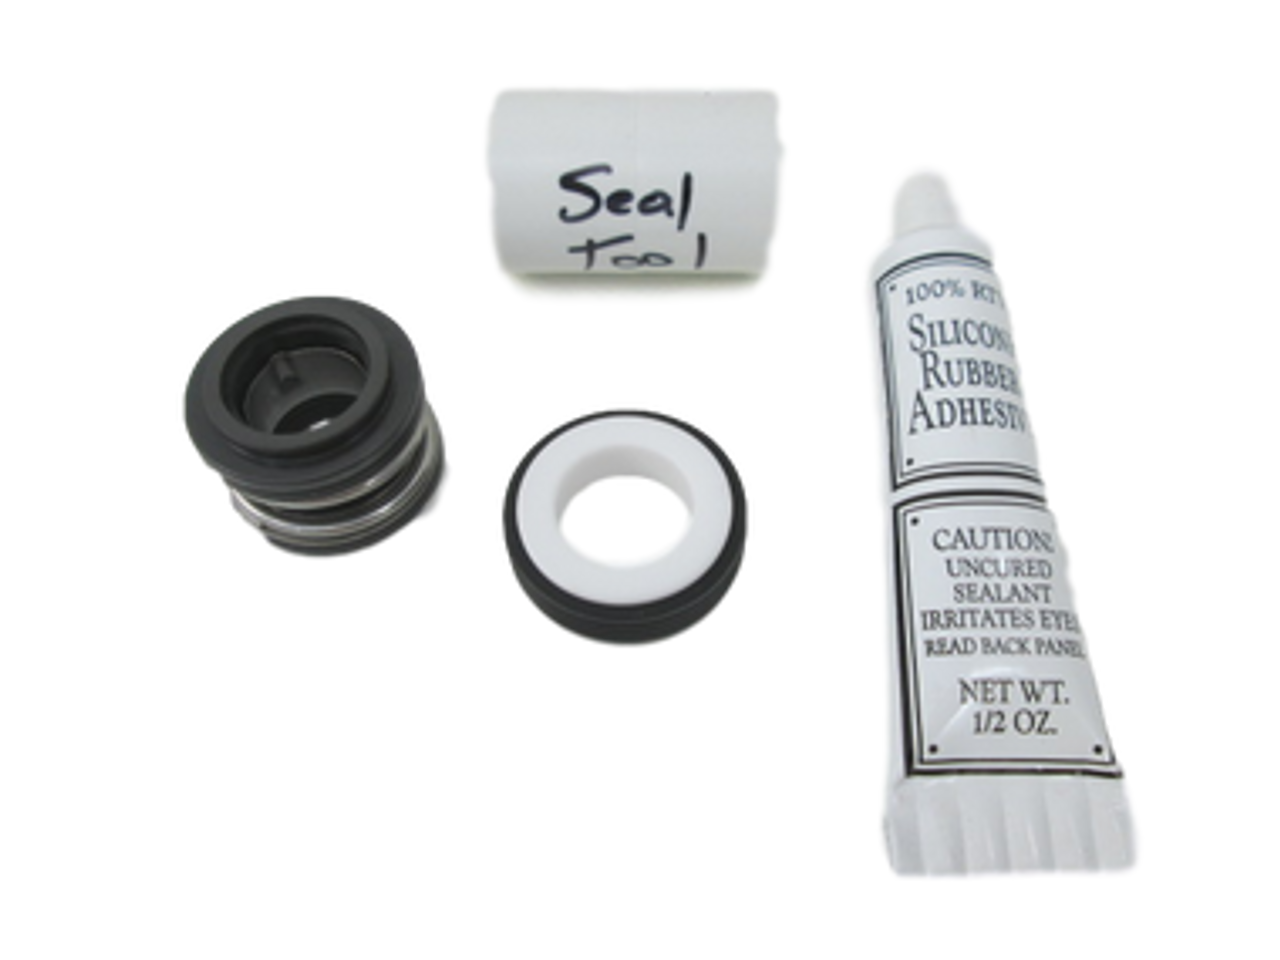 Jacuzzi (4) Mount Piranha Thera-Max Thera-Flo Pump Seal Parts Kit with Silicon